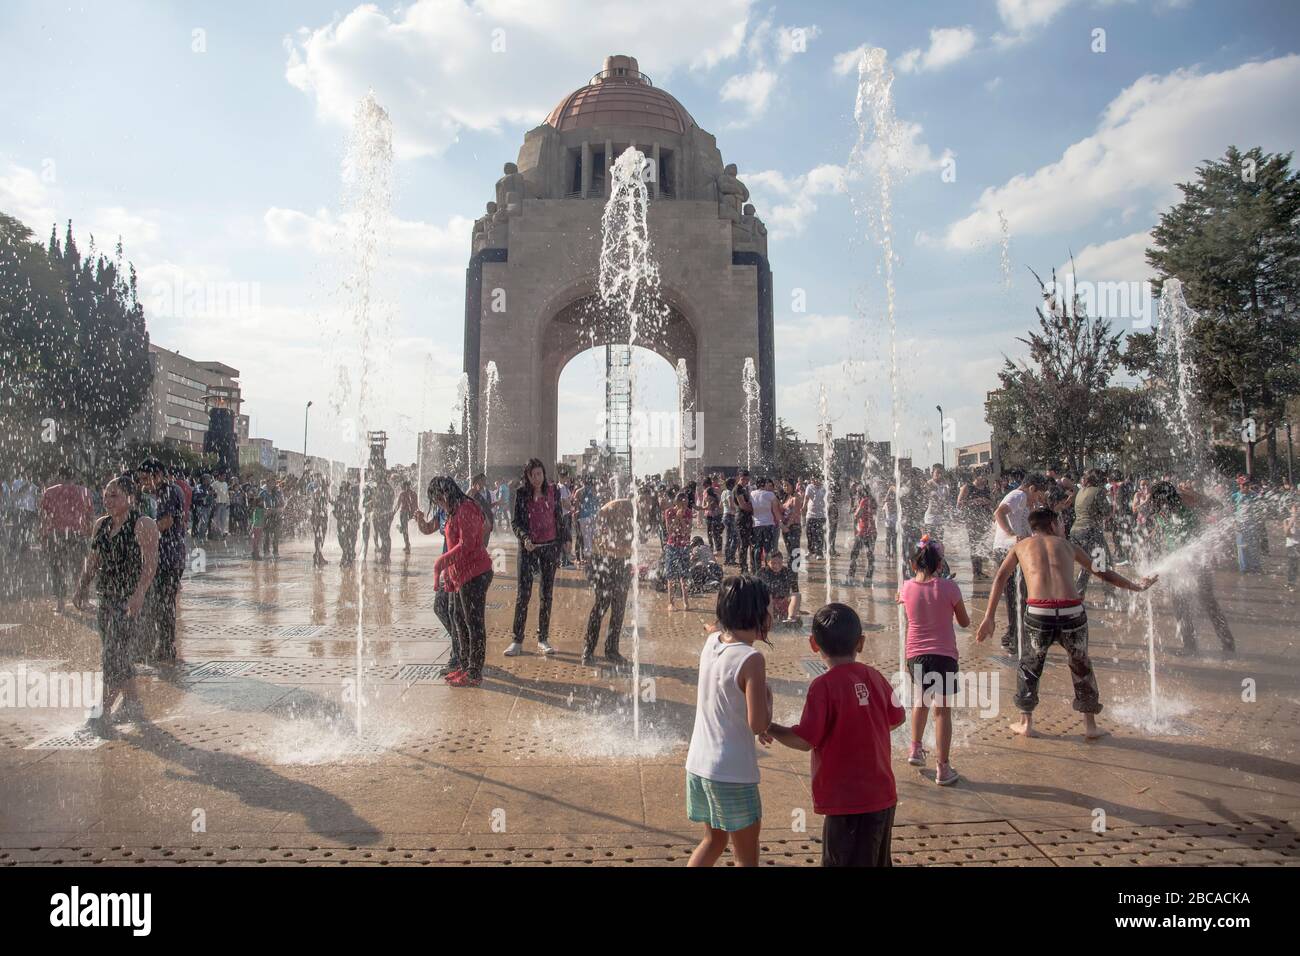 People in fountains during heatwave, Plaza de la Revolucion,  Mexico City, Mexico Stock Photo